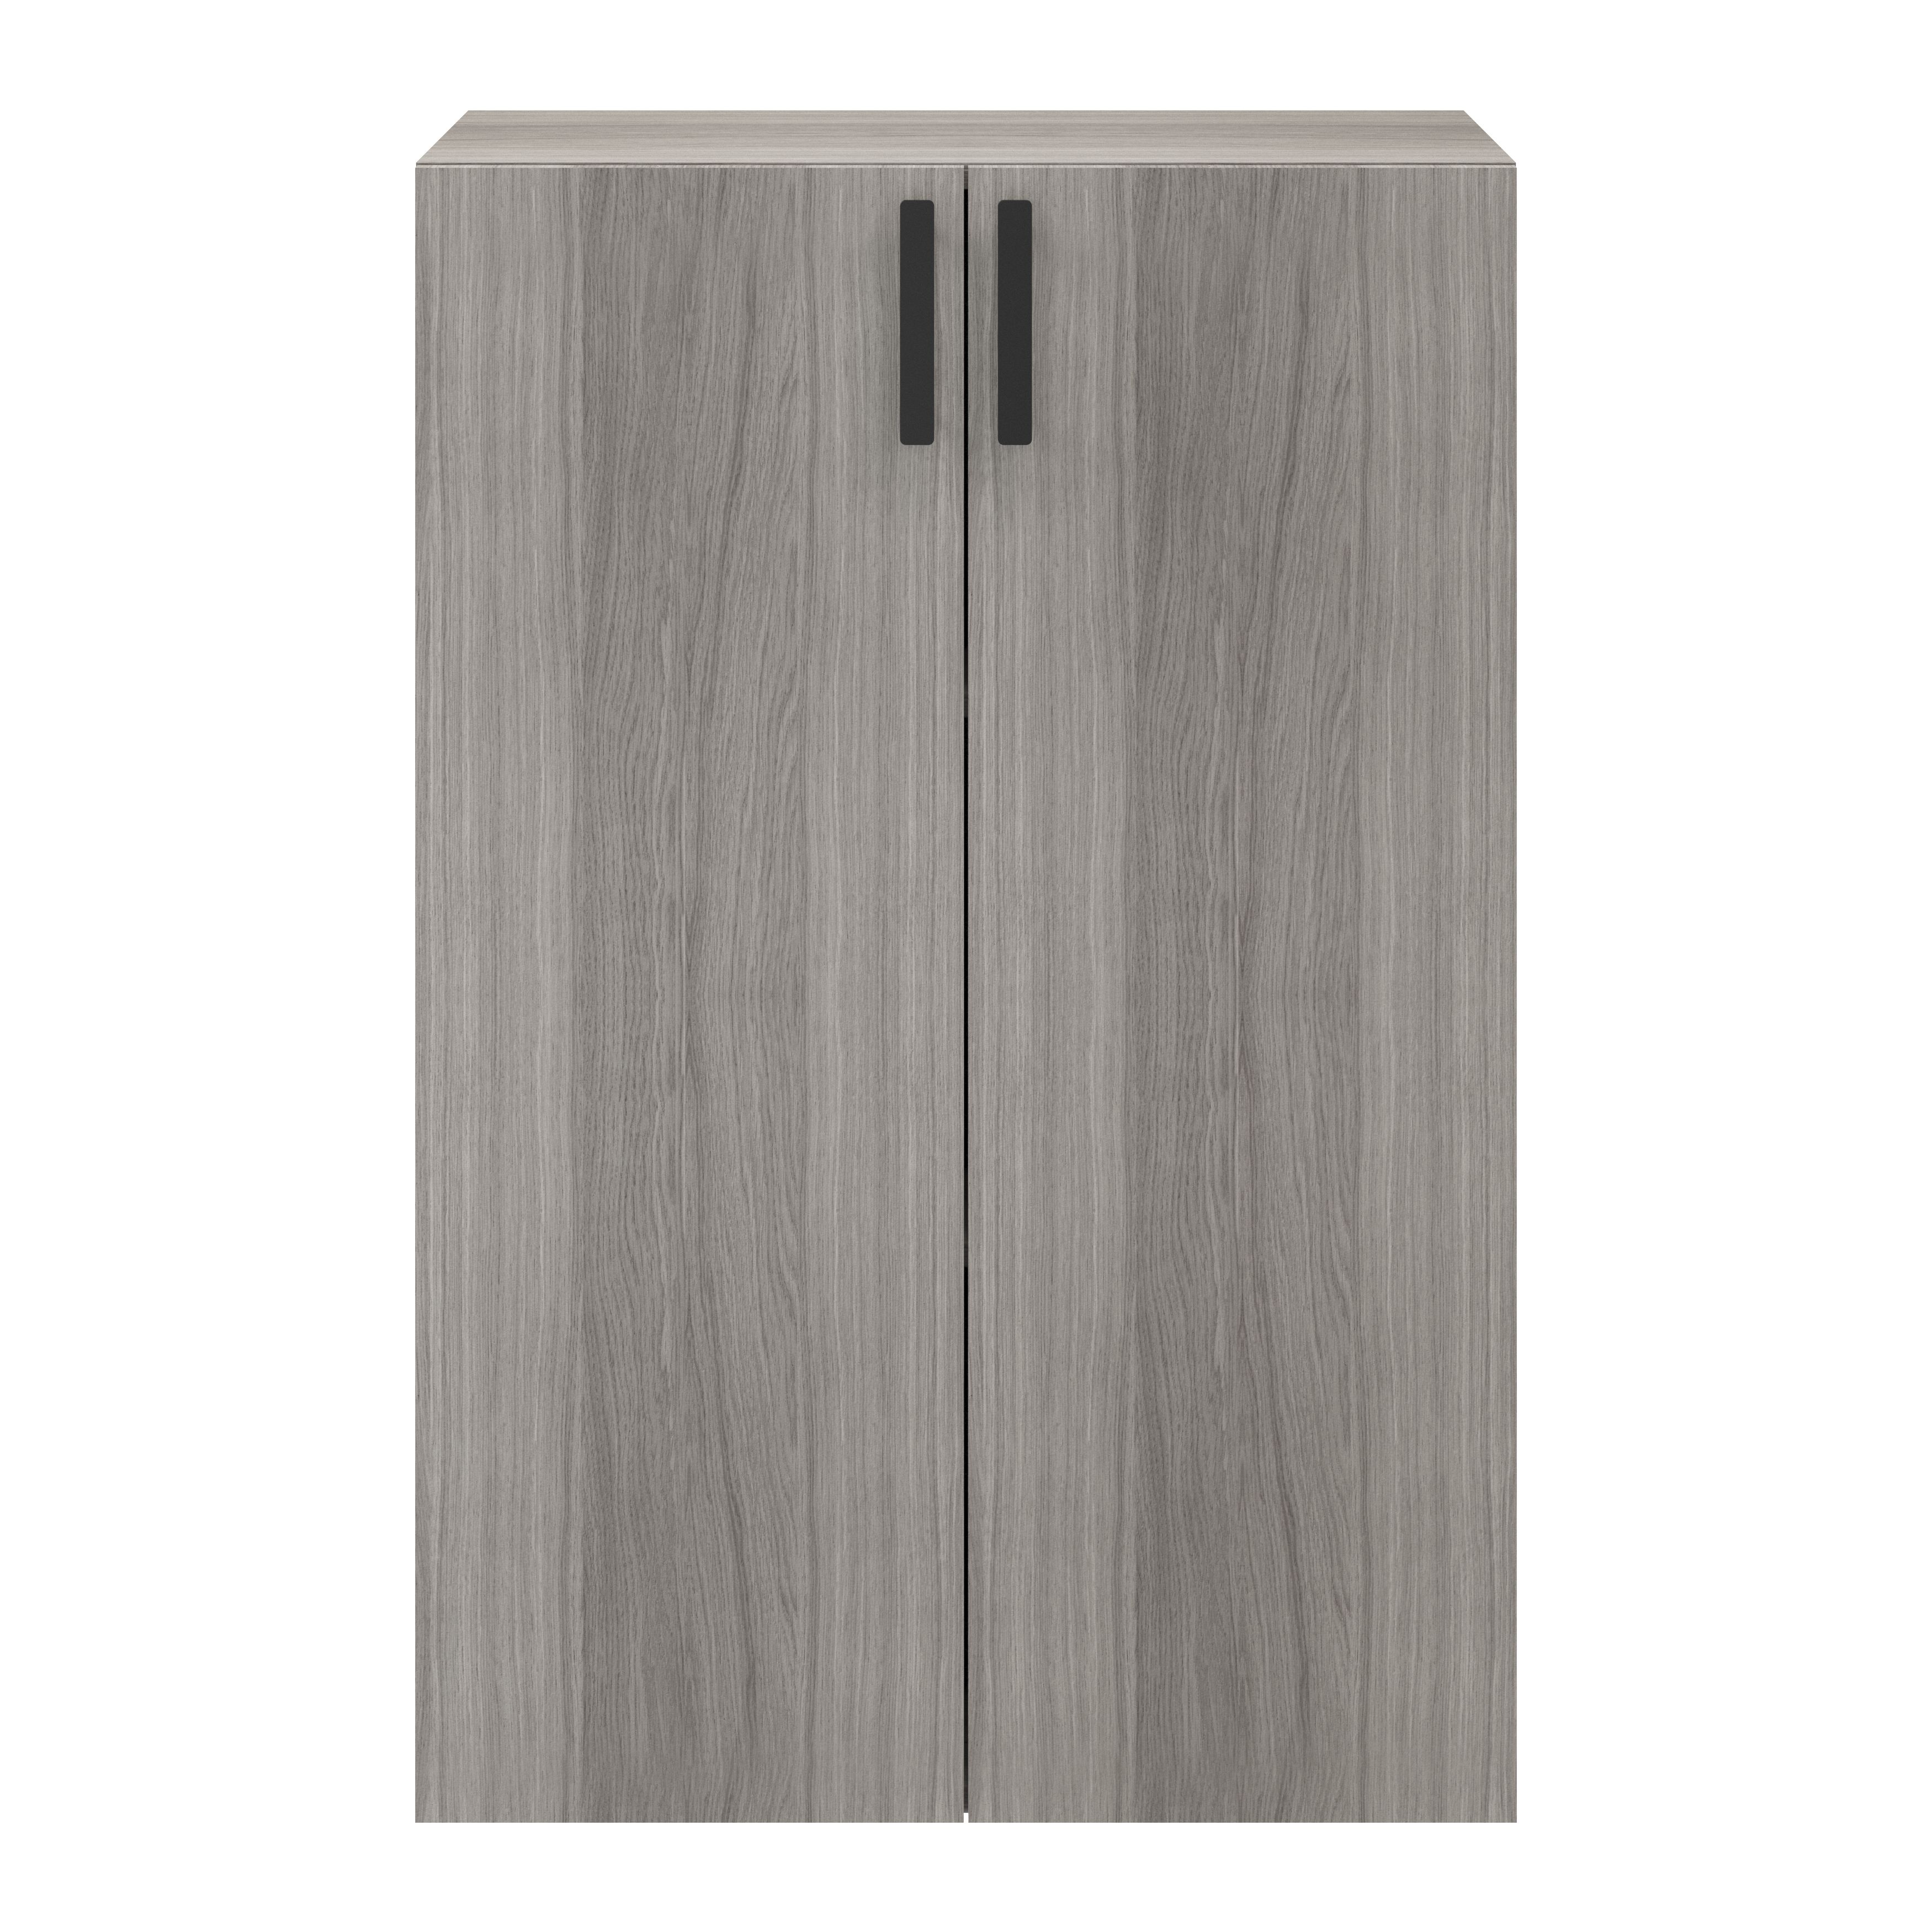 GoodHome Atomia Matt Black Doors & drawers Handle (L)16.5cm, Pack of 2